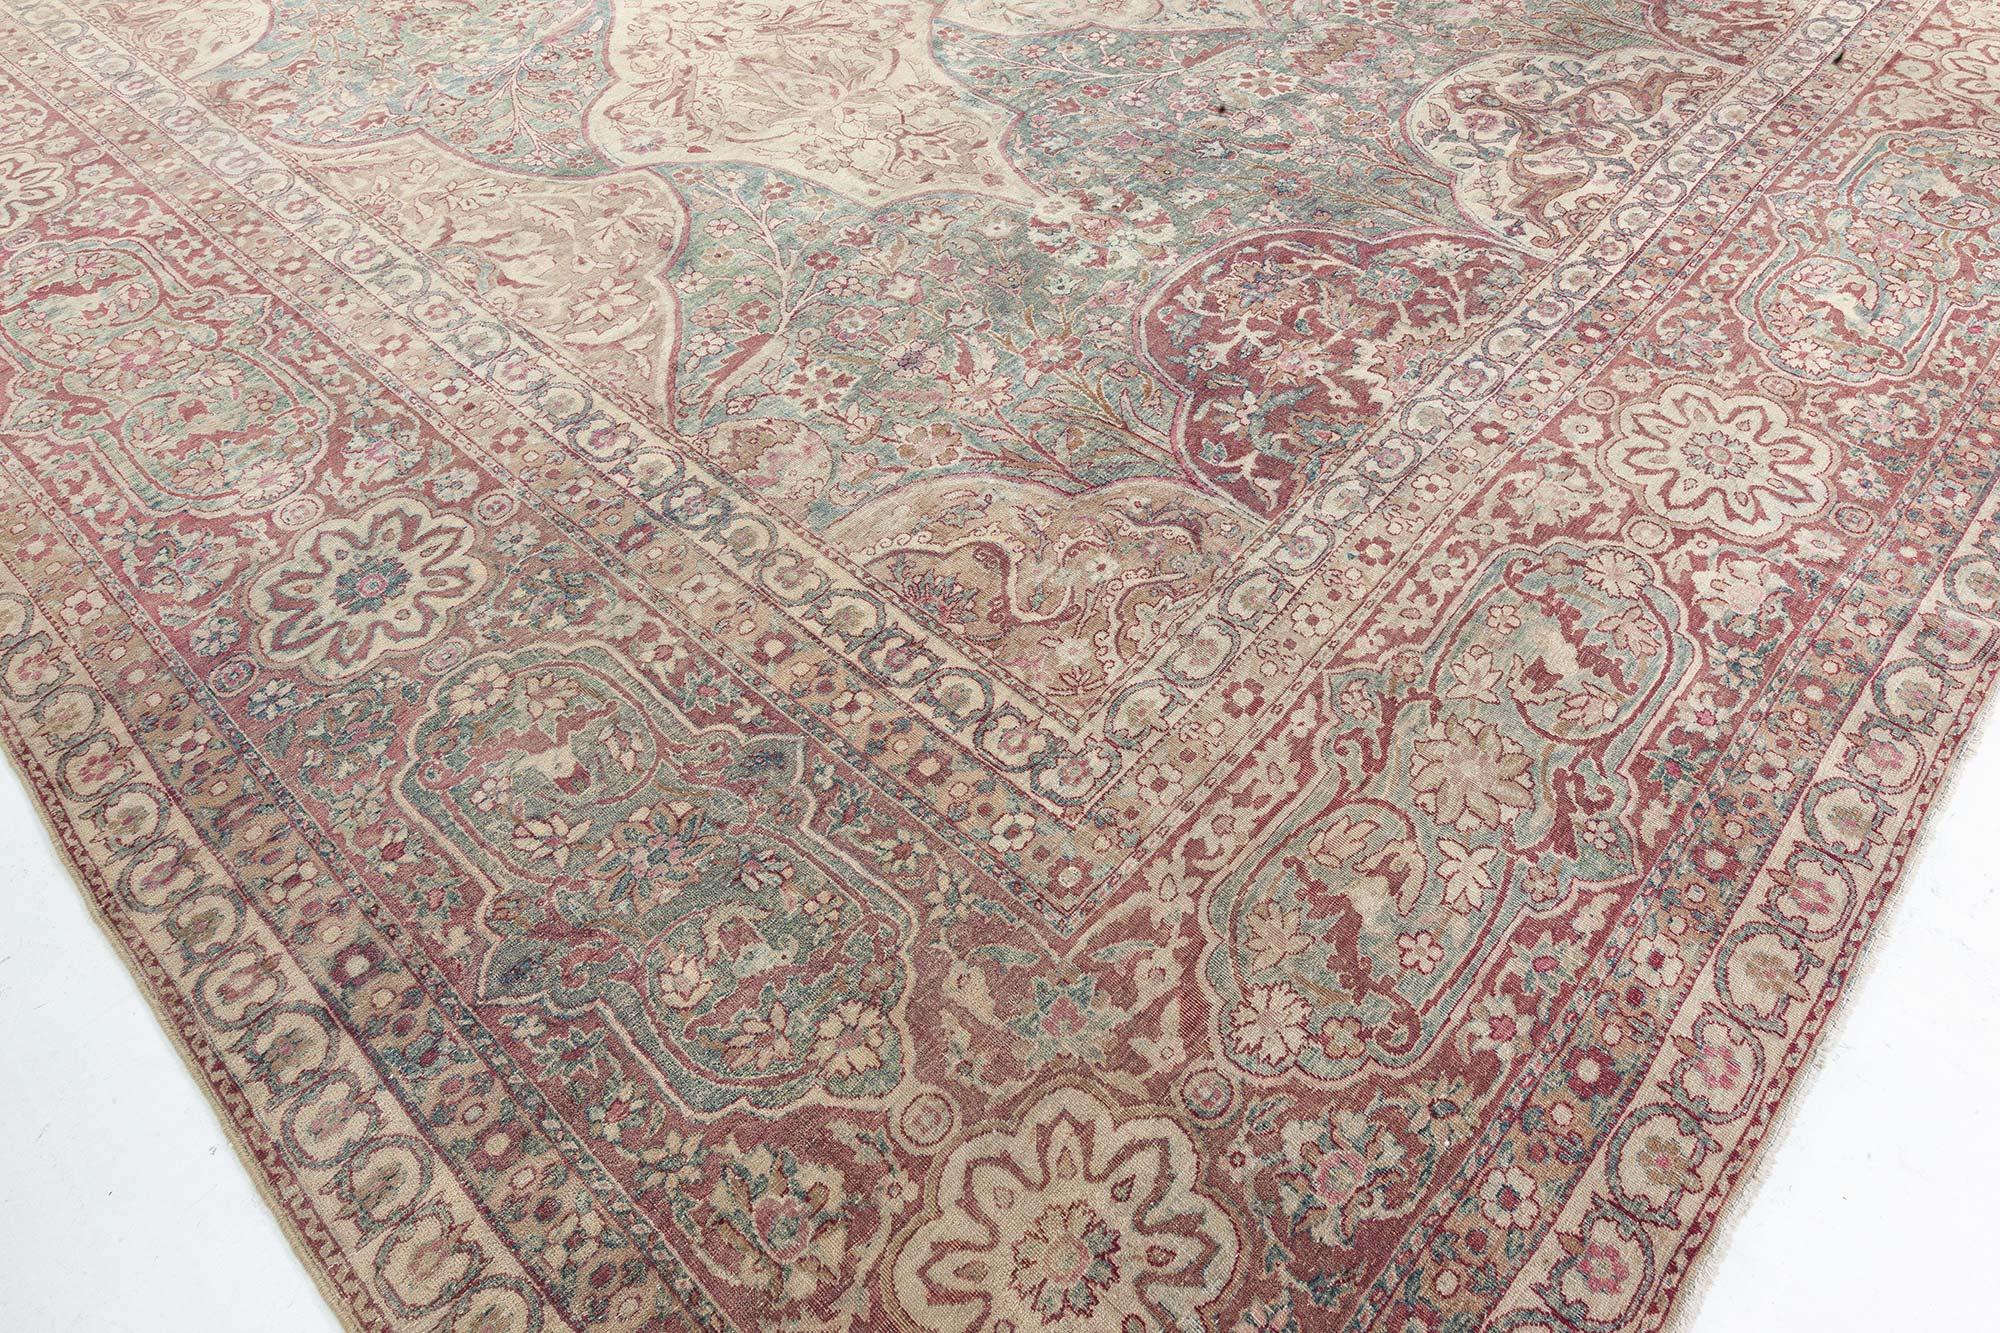 Antique Persian Kirman rug.
Size: 10'8